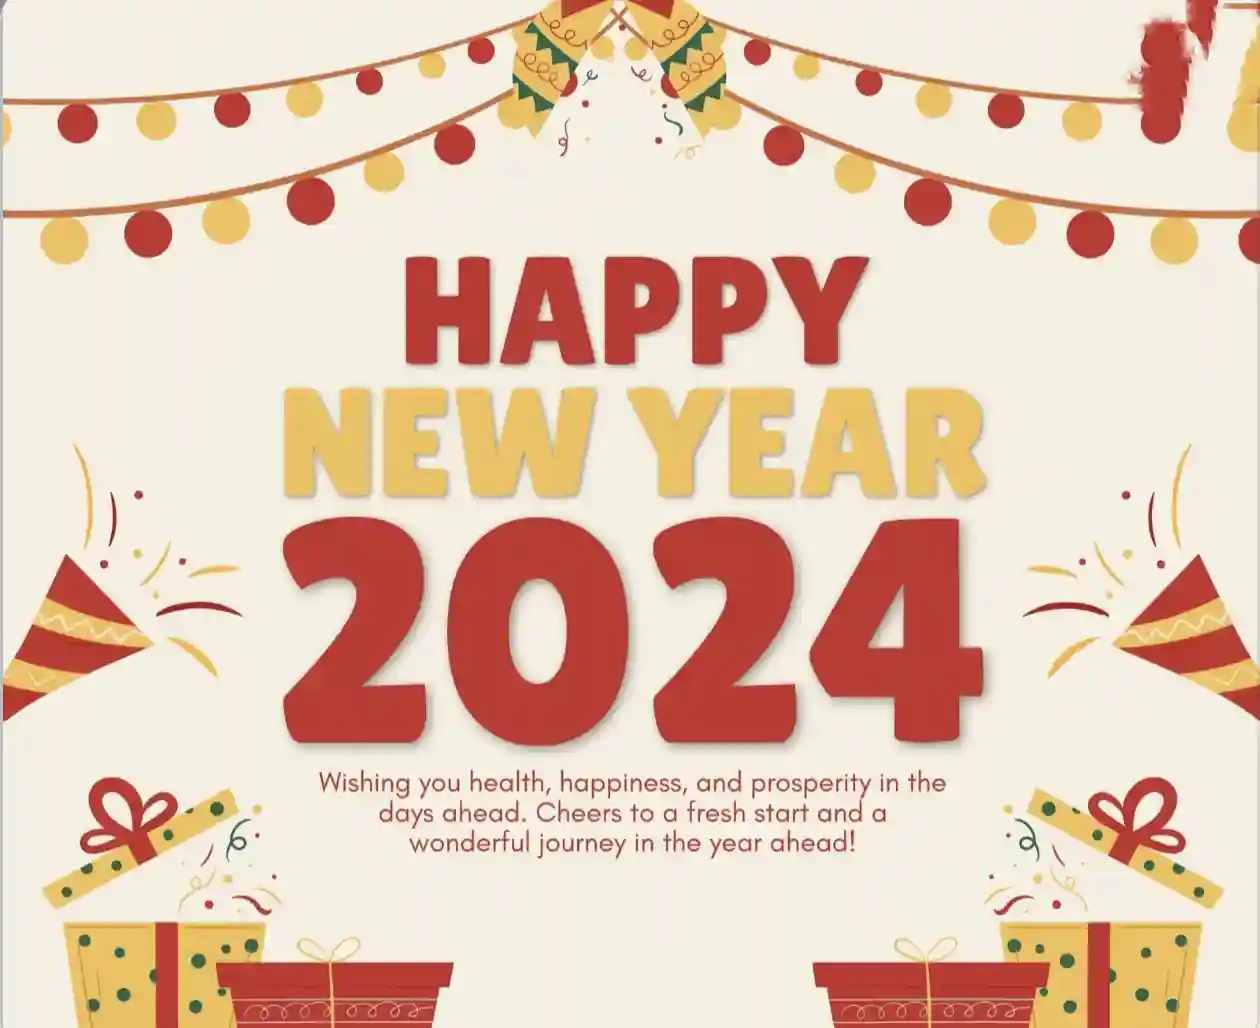 Happy New Year 2024 Images ,Wallpaper, Pictures In Bengali - নতুন বছরের শুভেচ্ছা ছবি, পিক, ওয়ালপেপার